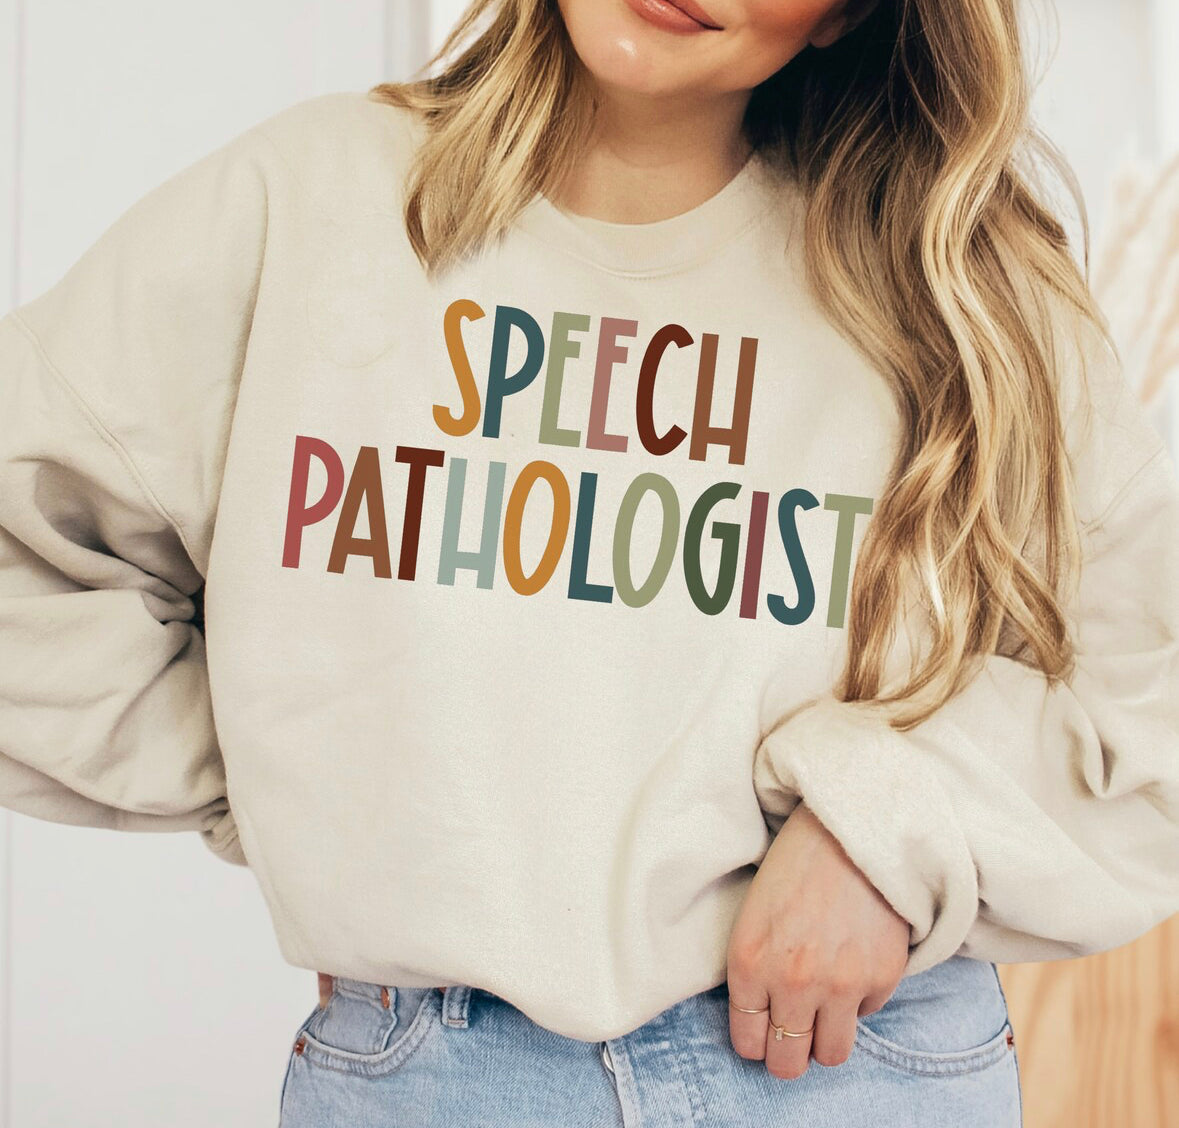 Speech pathologist